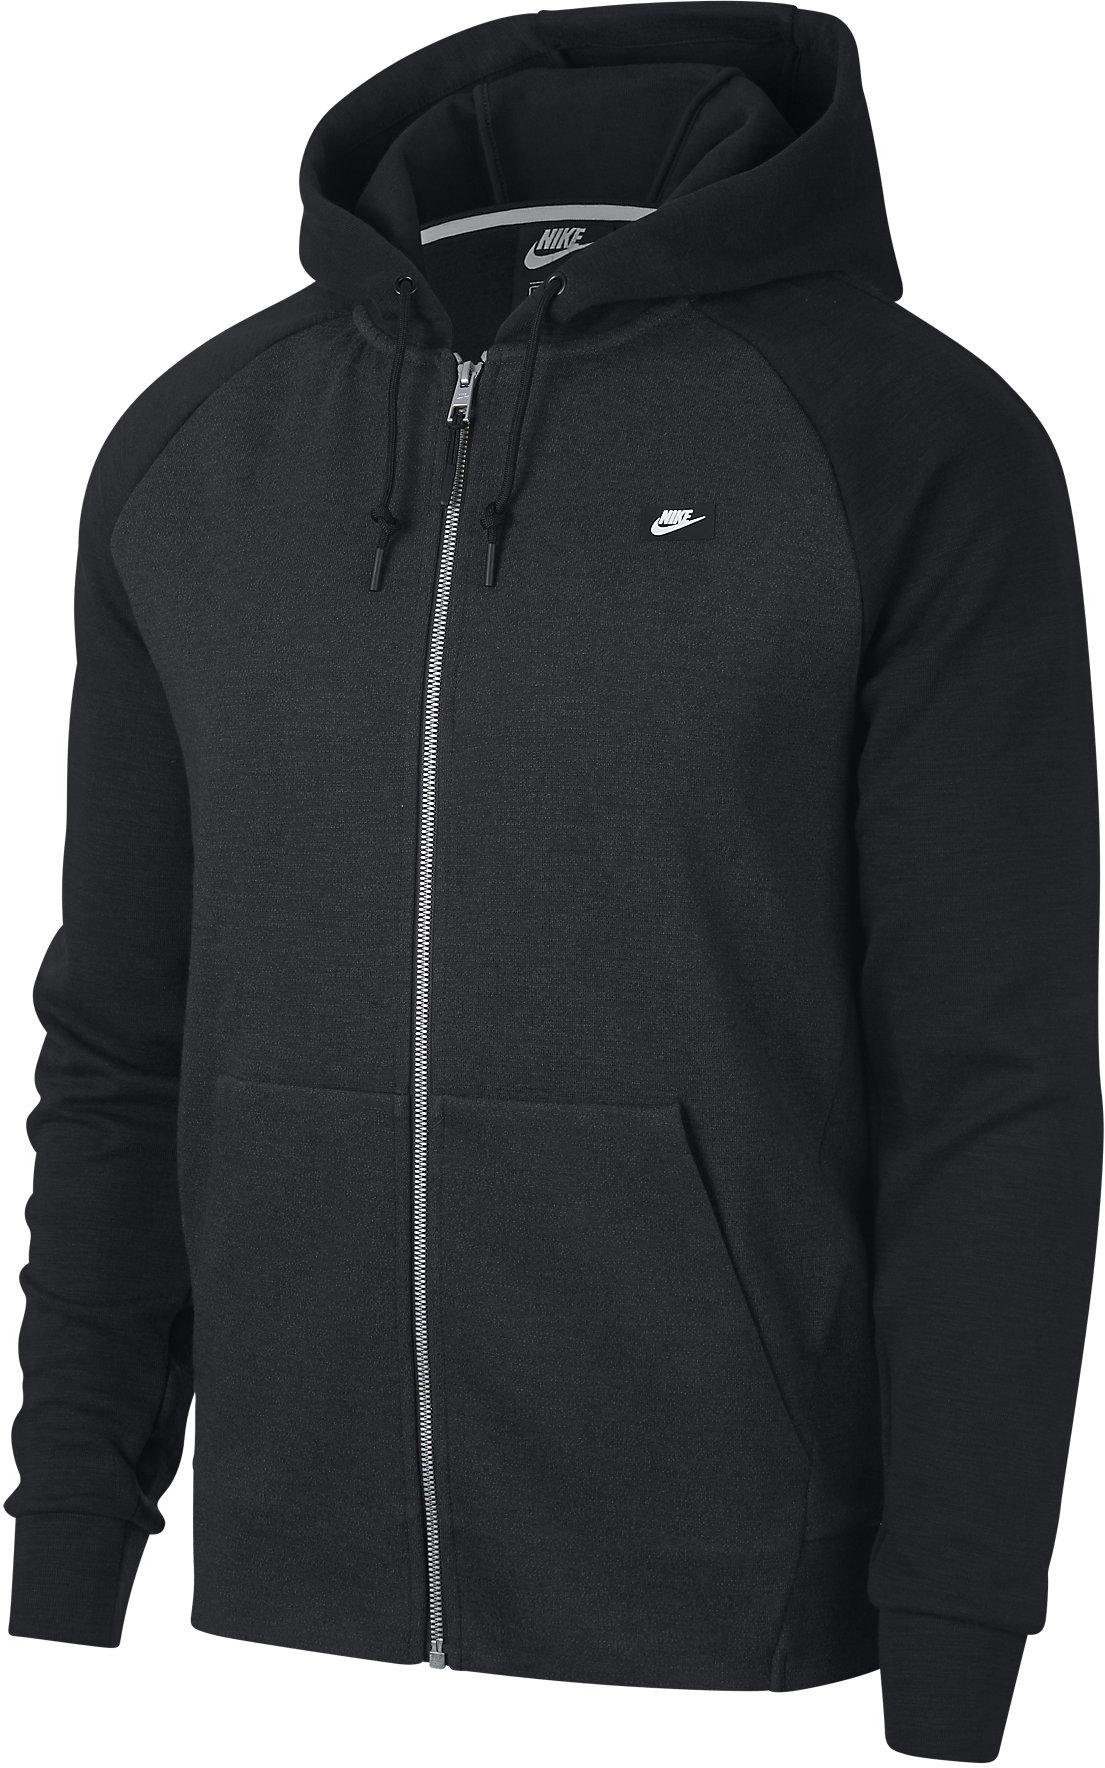 Hooded sweatshirt Nike M NSW OPTIC HOODIE FZ